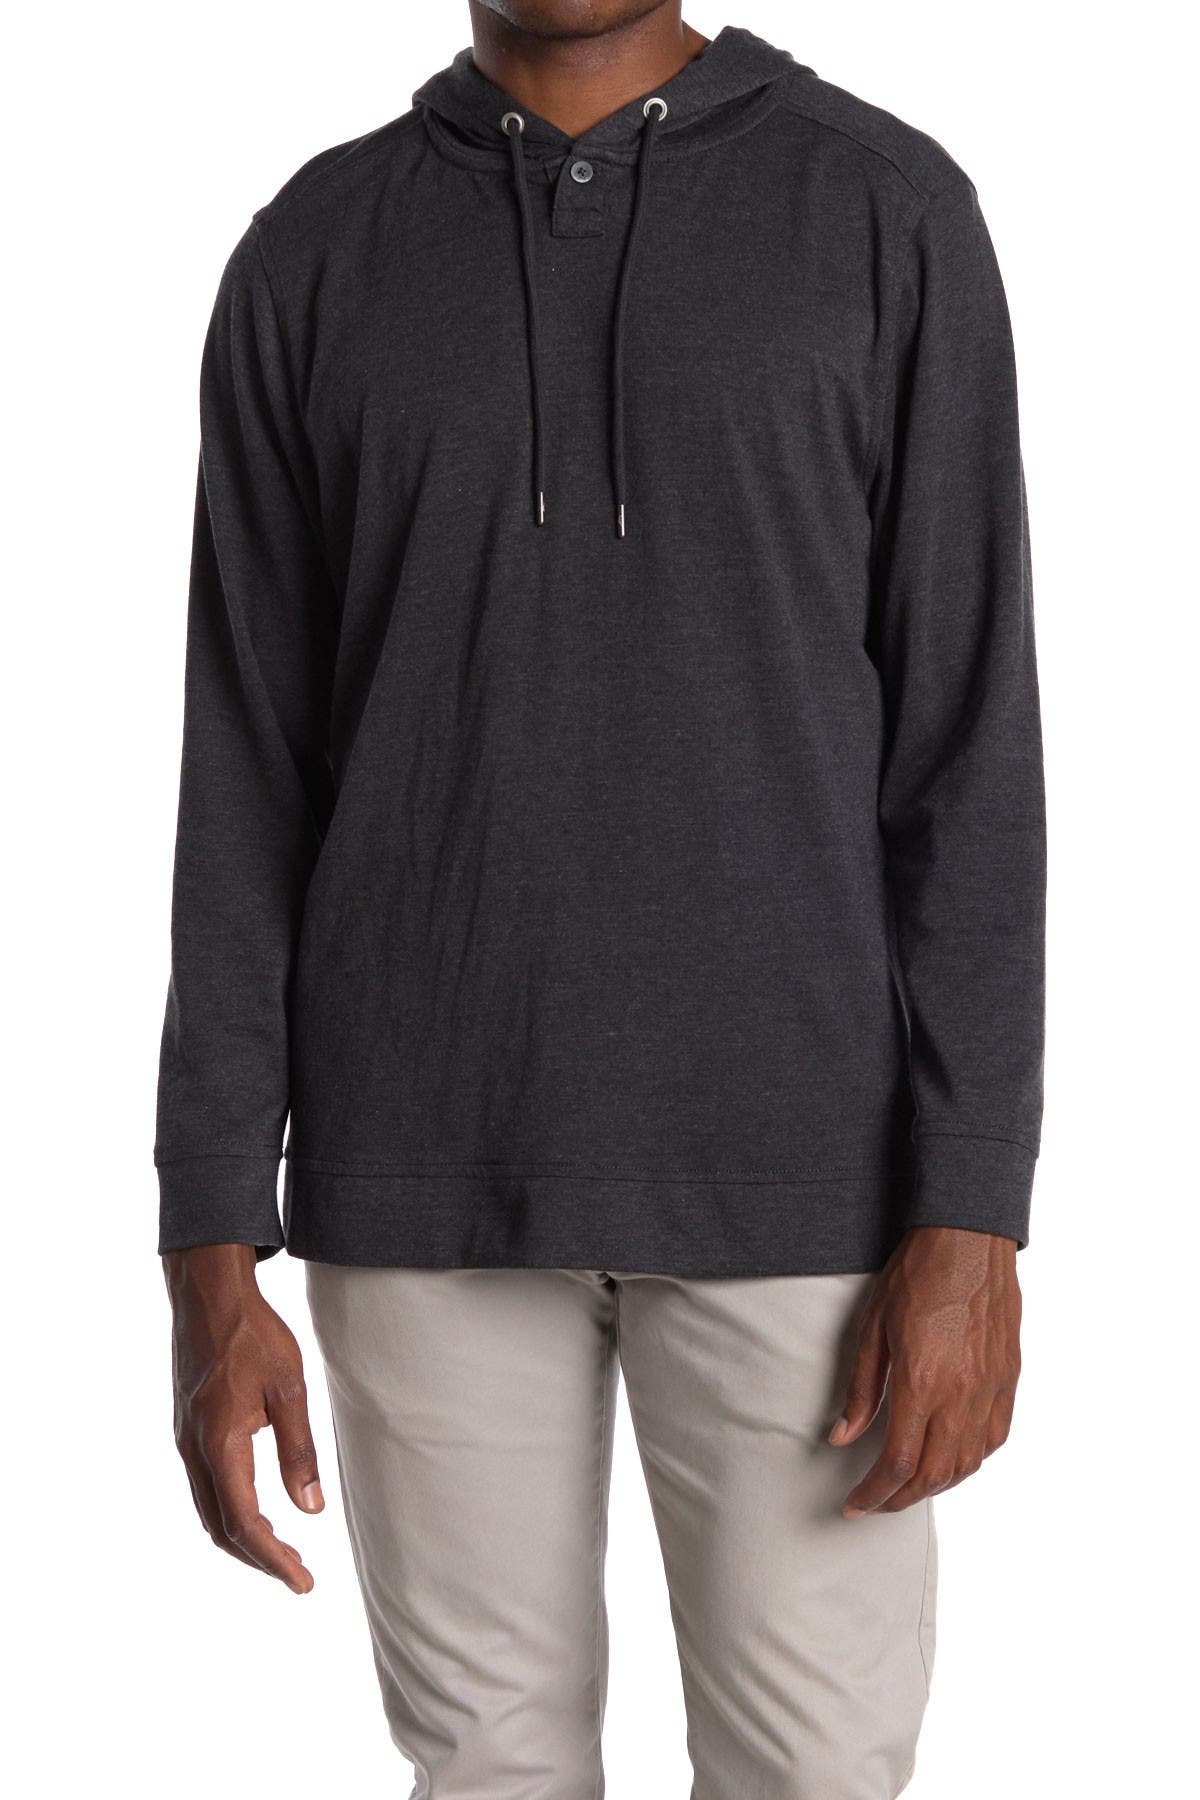 tommy bahama hooded sweatshirt